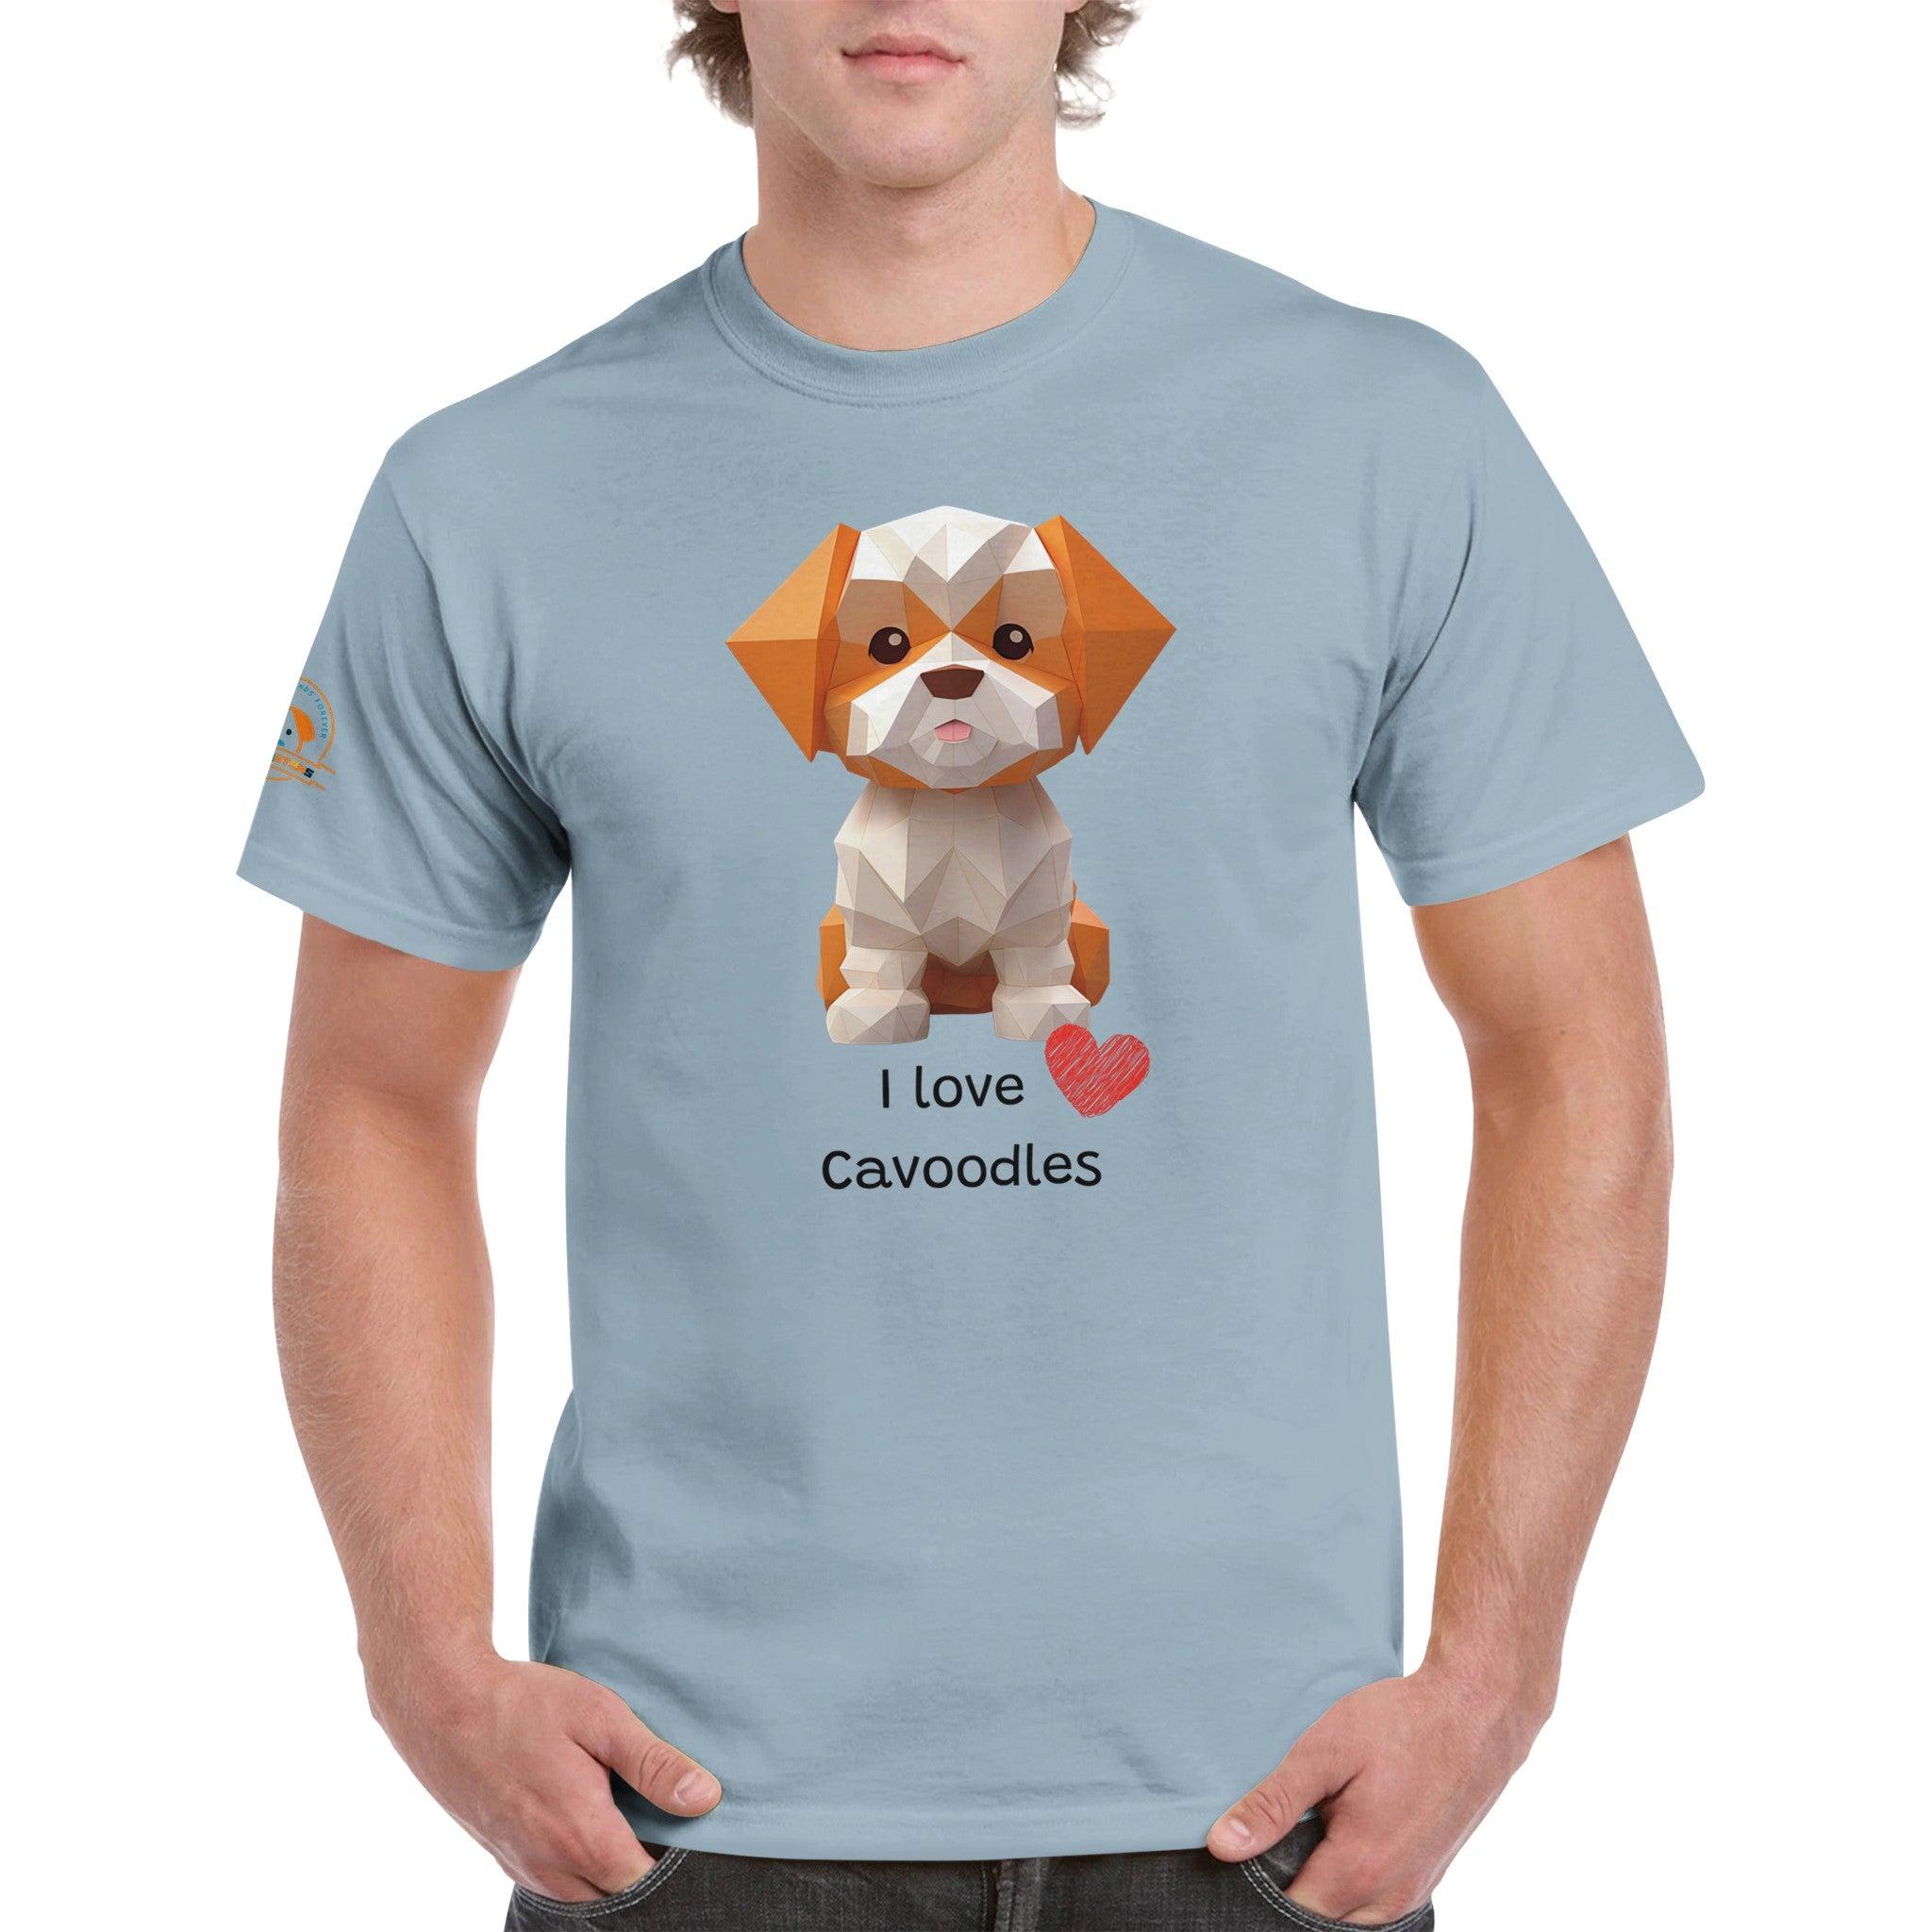 Polygon Pups: Cavoodles - Geometric Dog Breed T-Shirt - Woofingtons